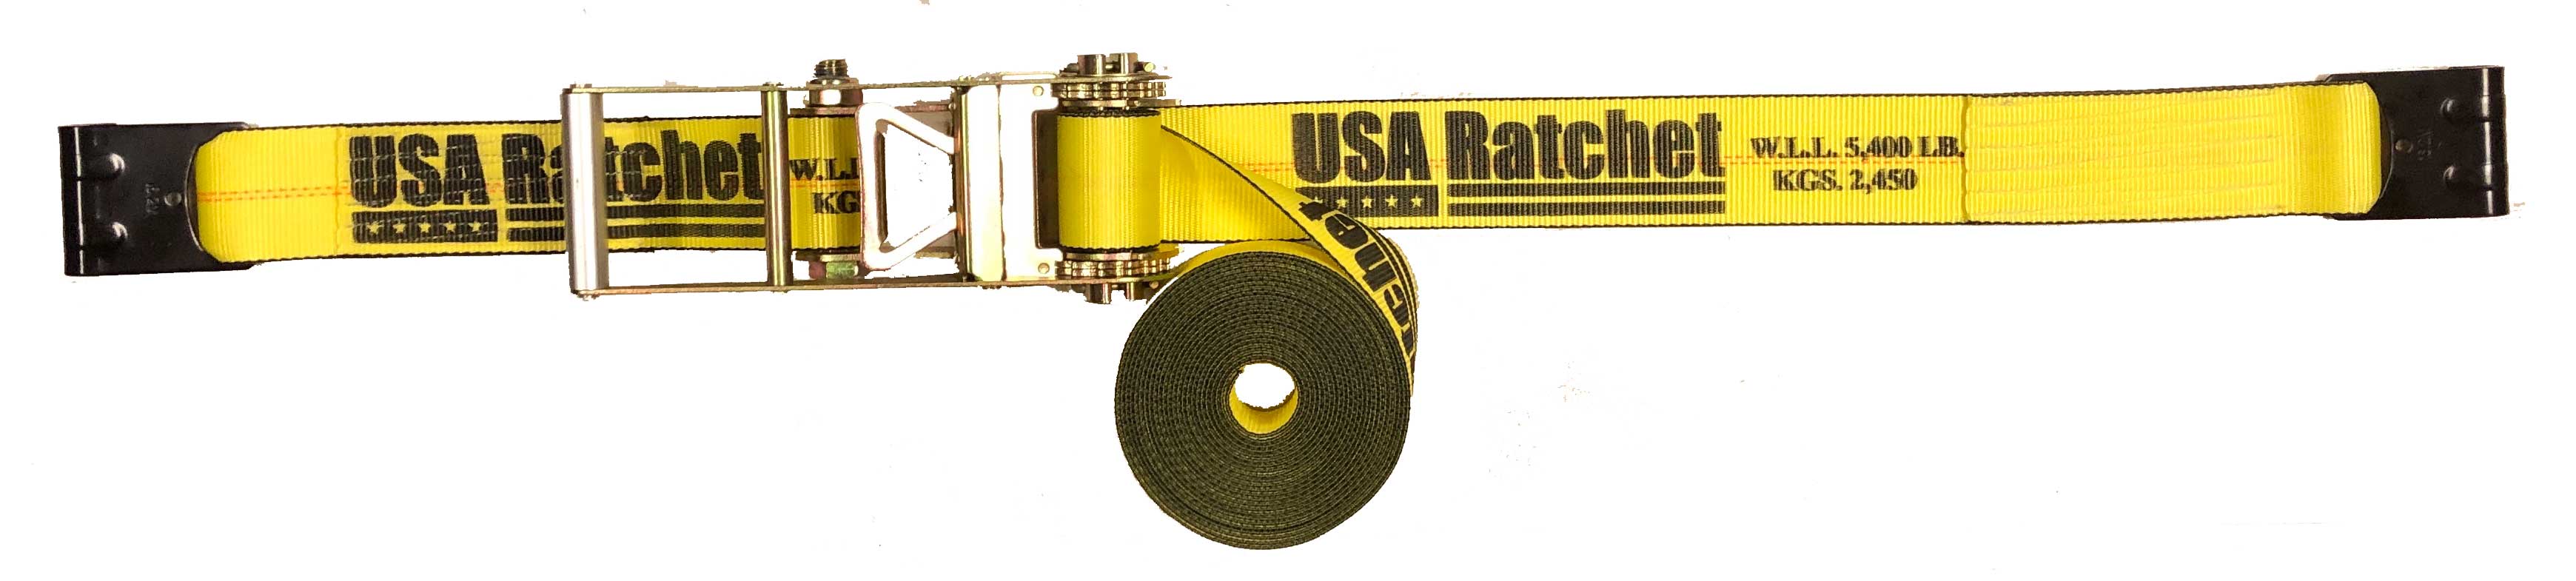 Laclede Chain RSFH3X30LP Ratchet Strap Flat Hook 3 x 30 Long Handle 5,400 lb Working Load Limit 4/Carton Yellow